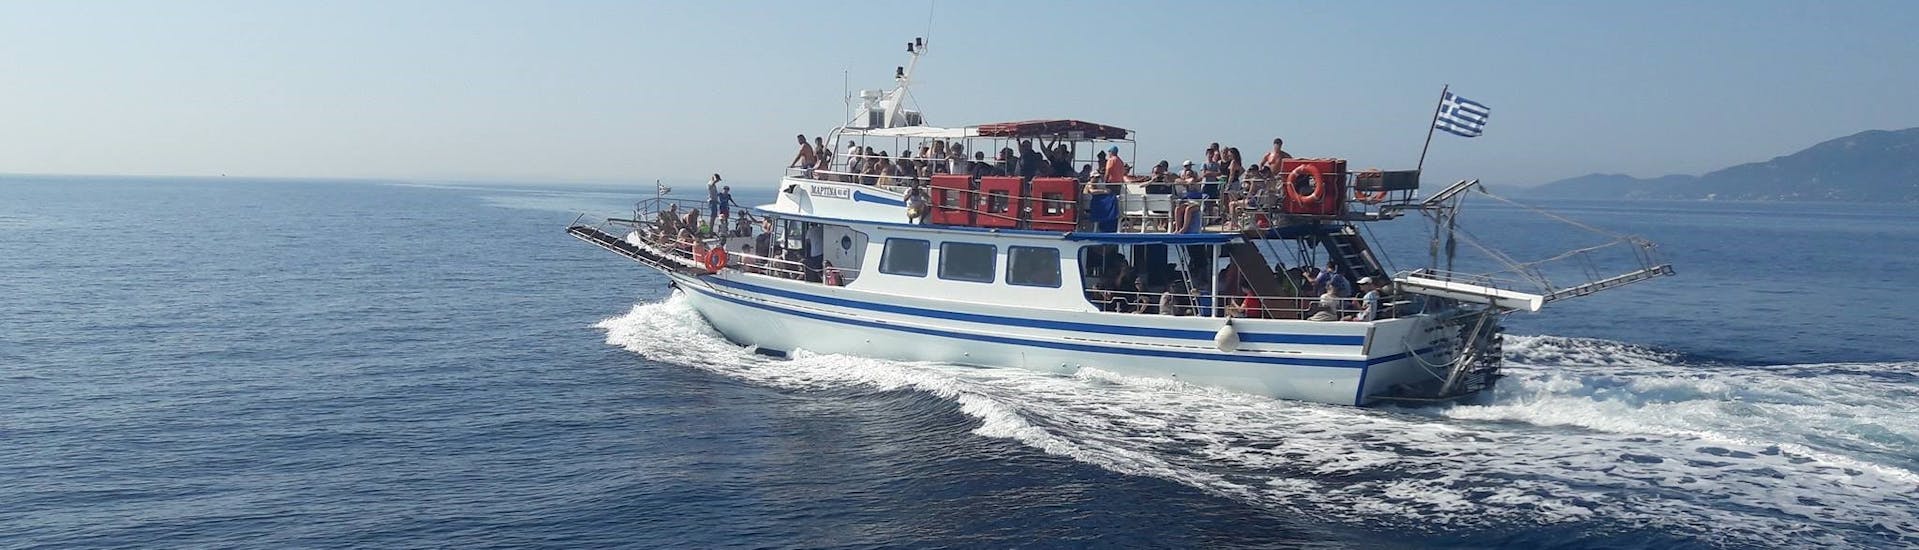 Paseo en barco de Corfu Town a Sivota con baño en el mar & visita guiada.